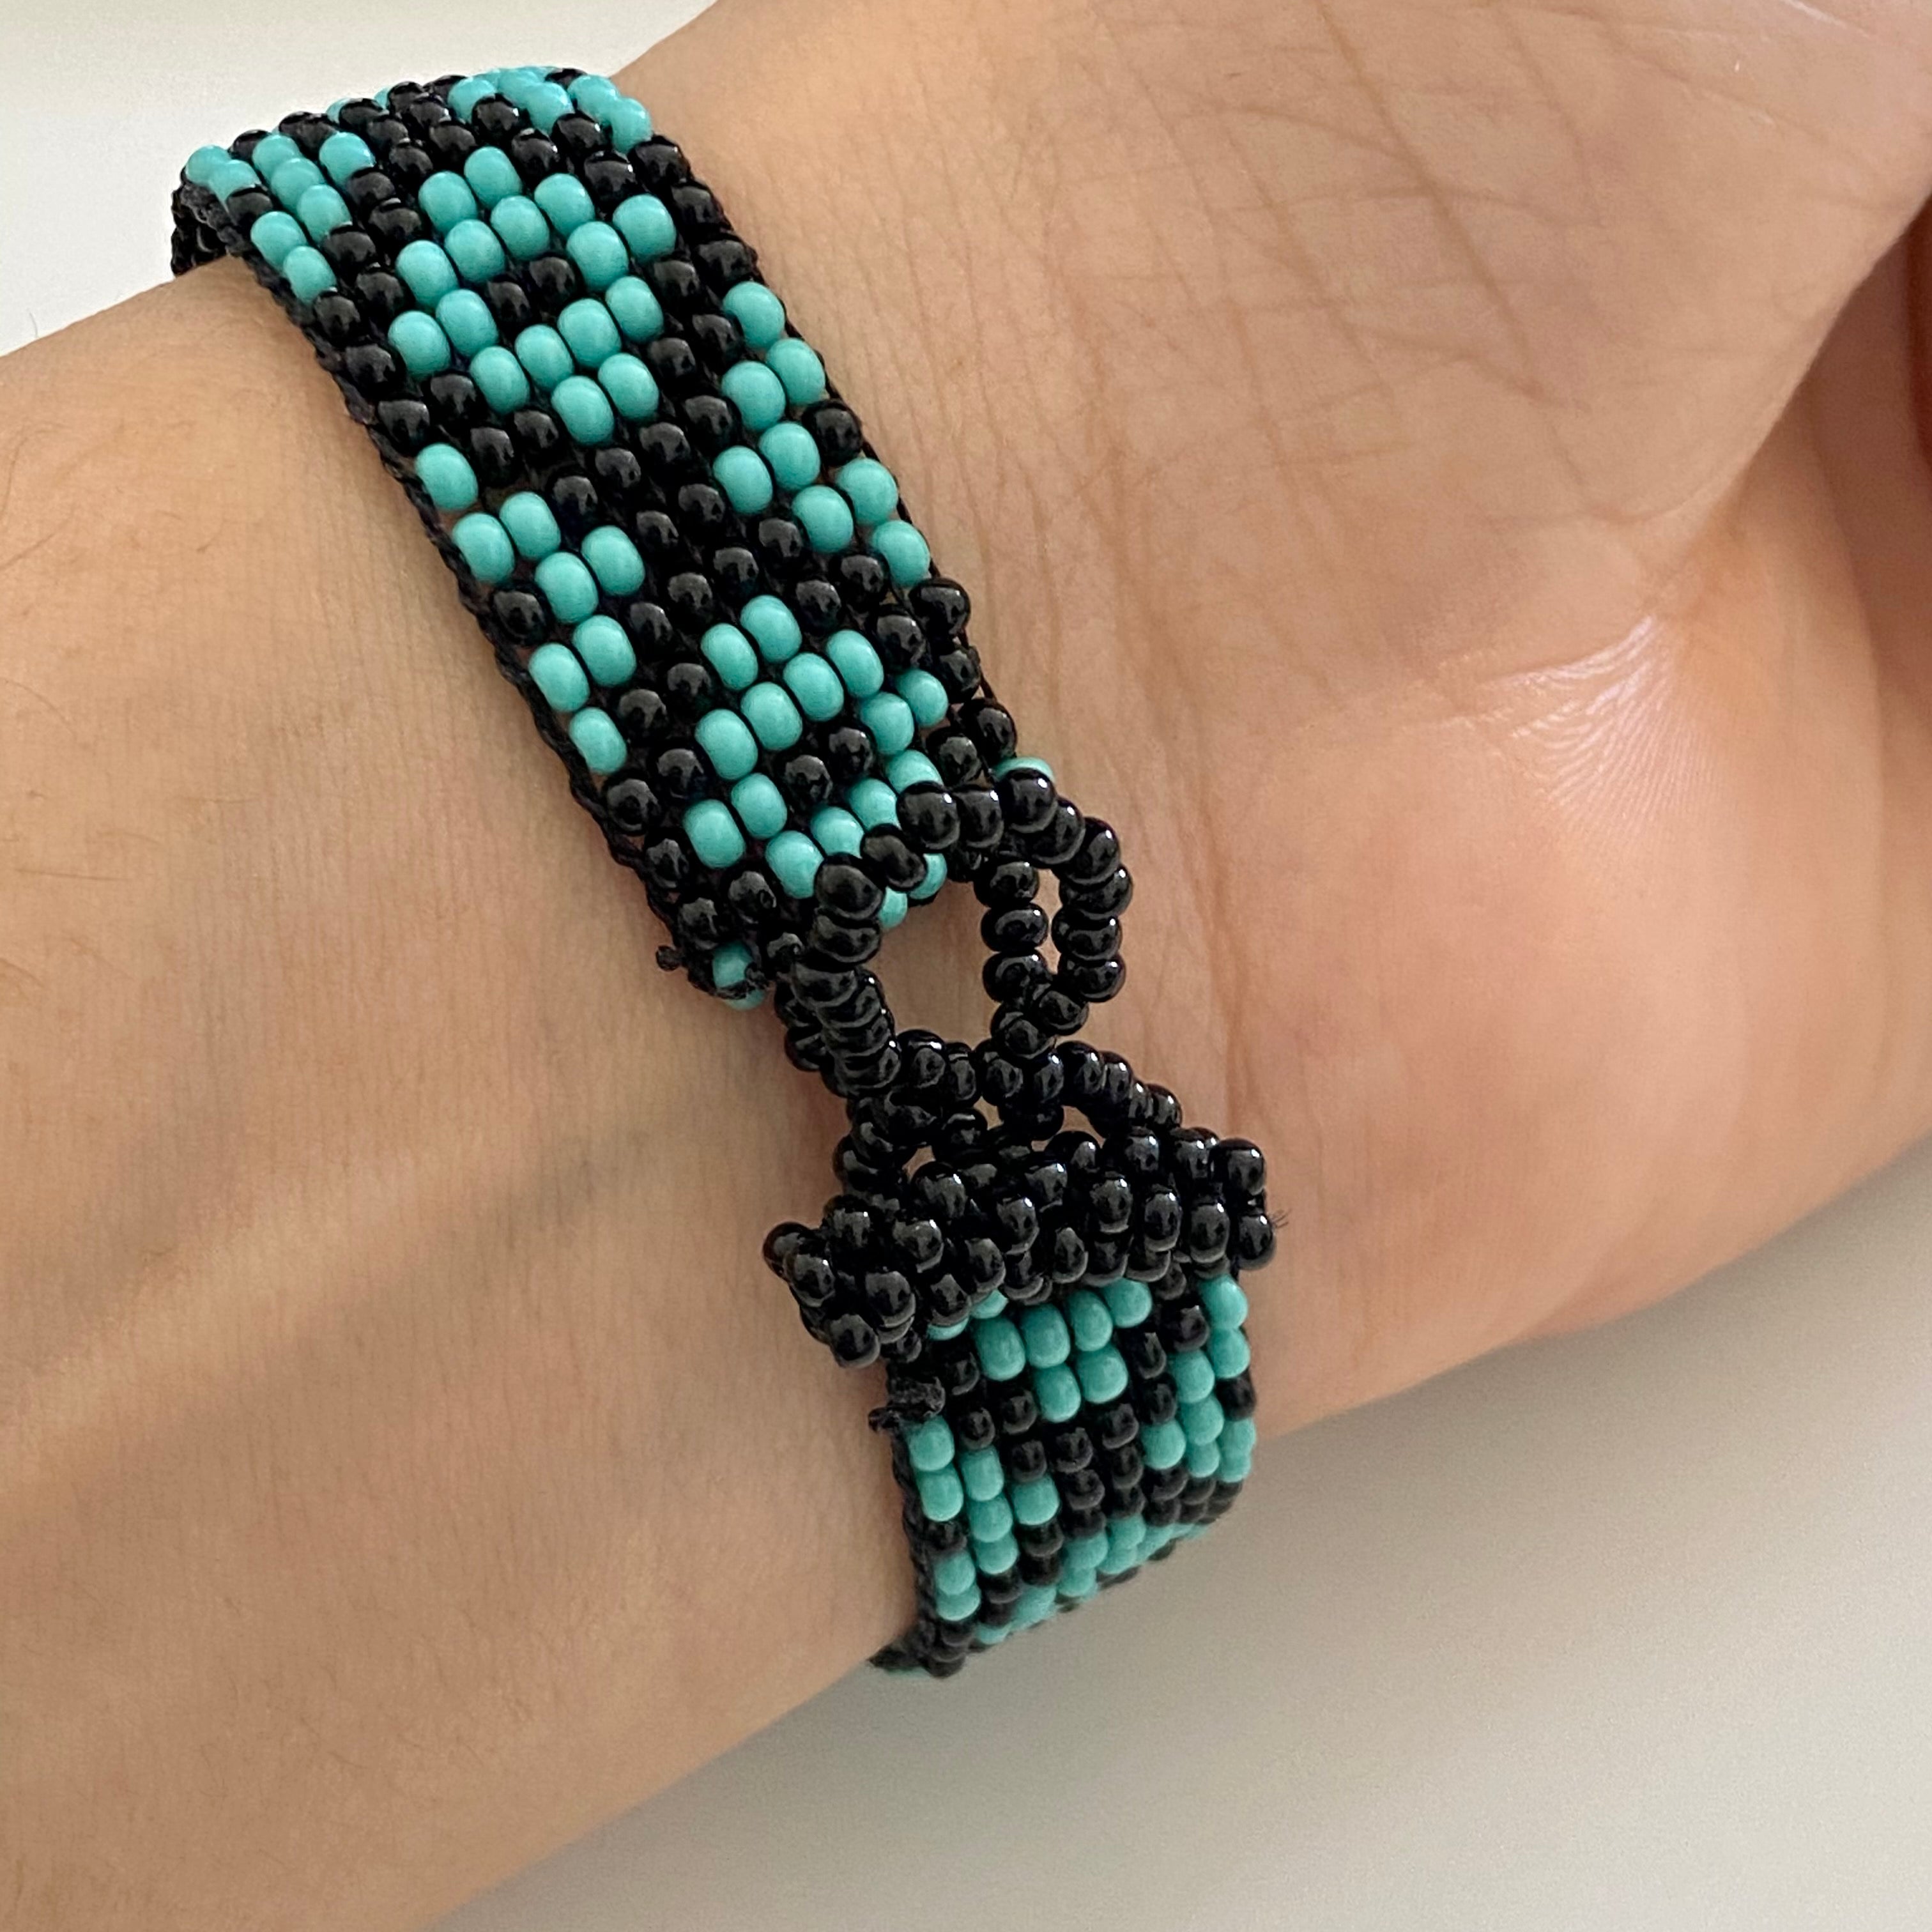 Orange glass bead bracelet - artisan made by Strongbeads